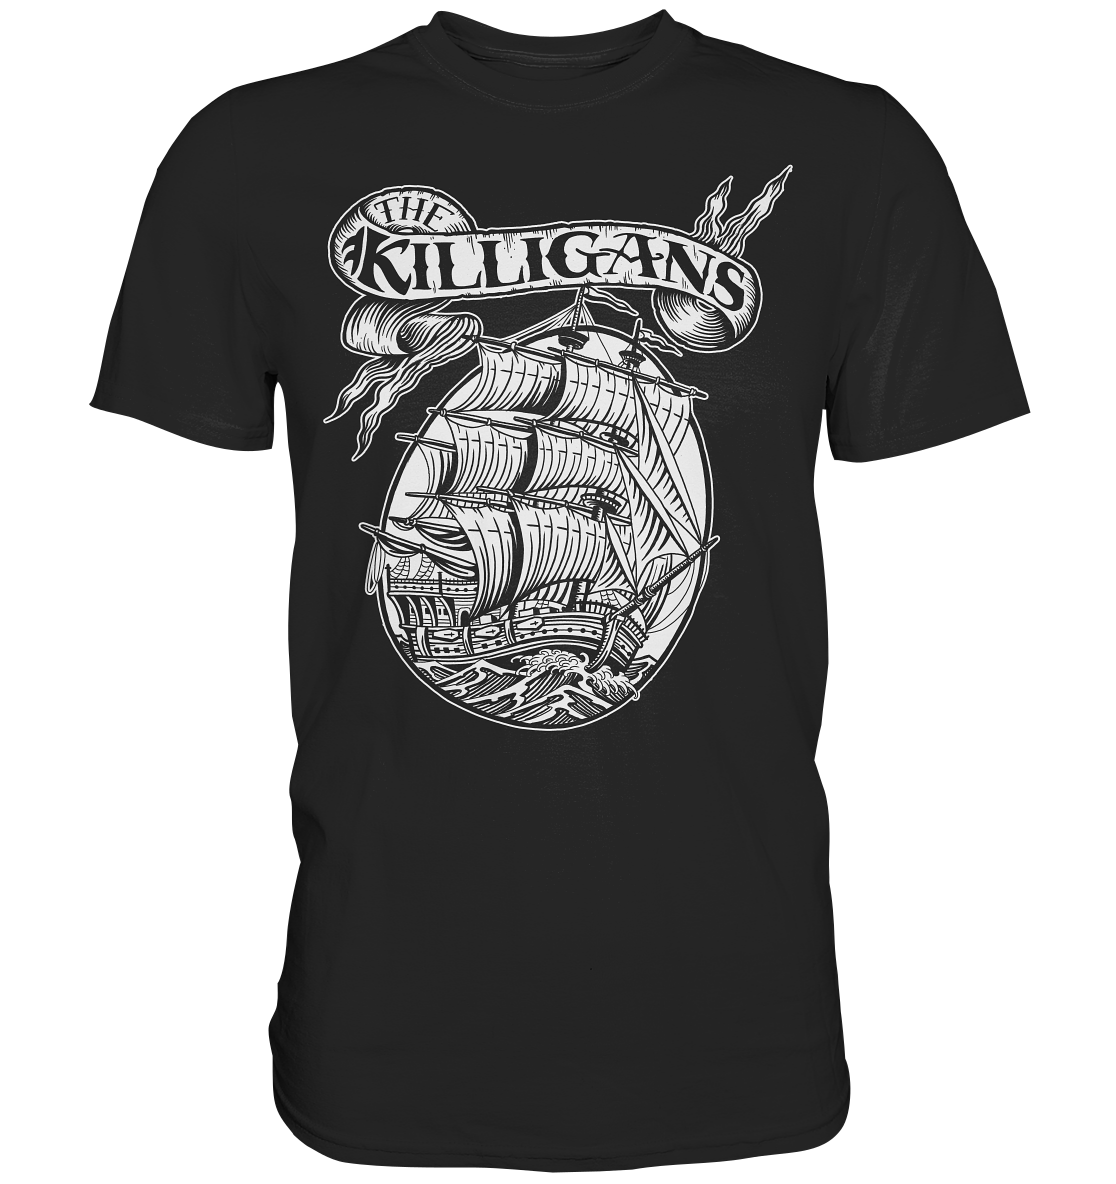 The Killigans "Ship" - Premium Shirt